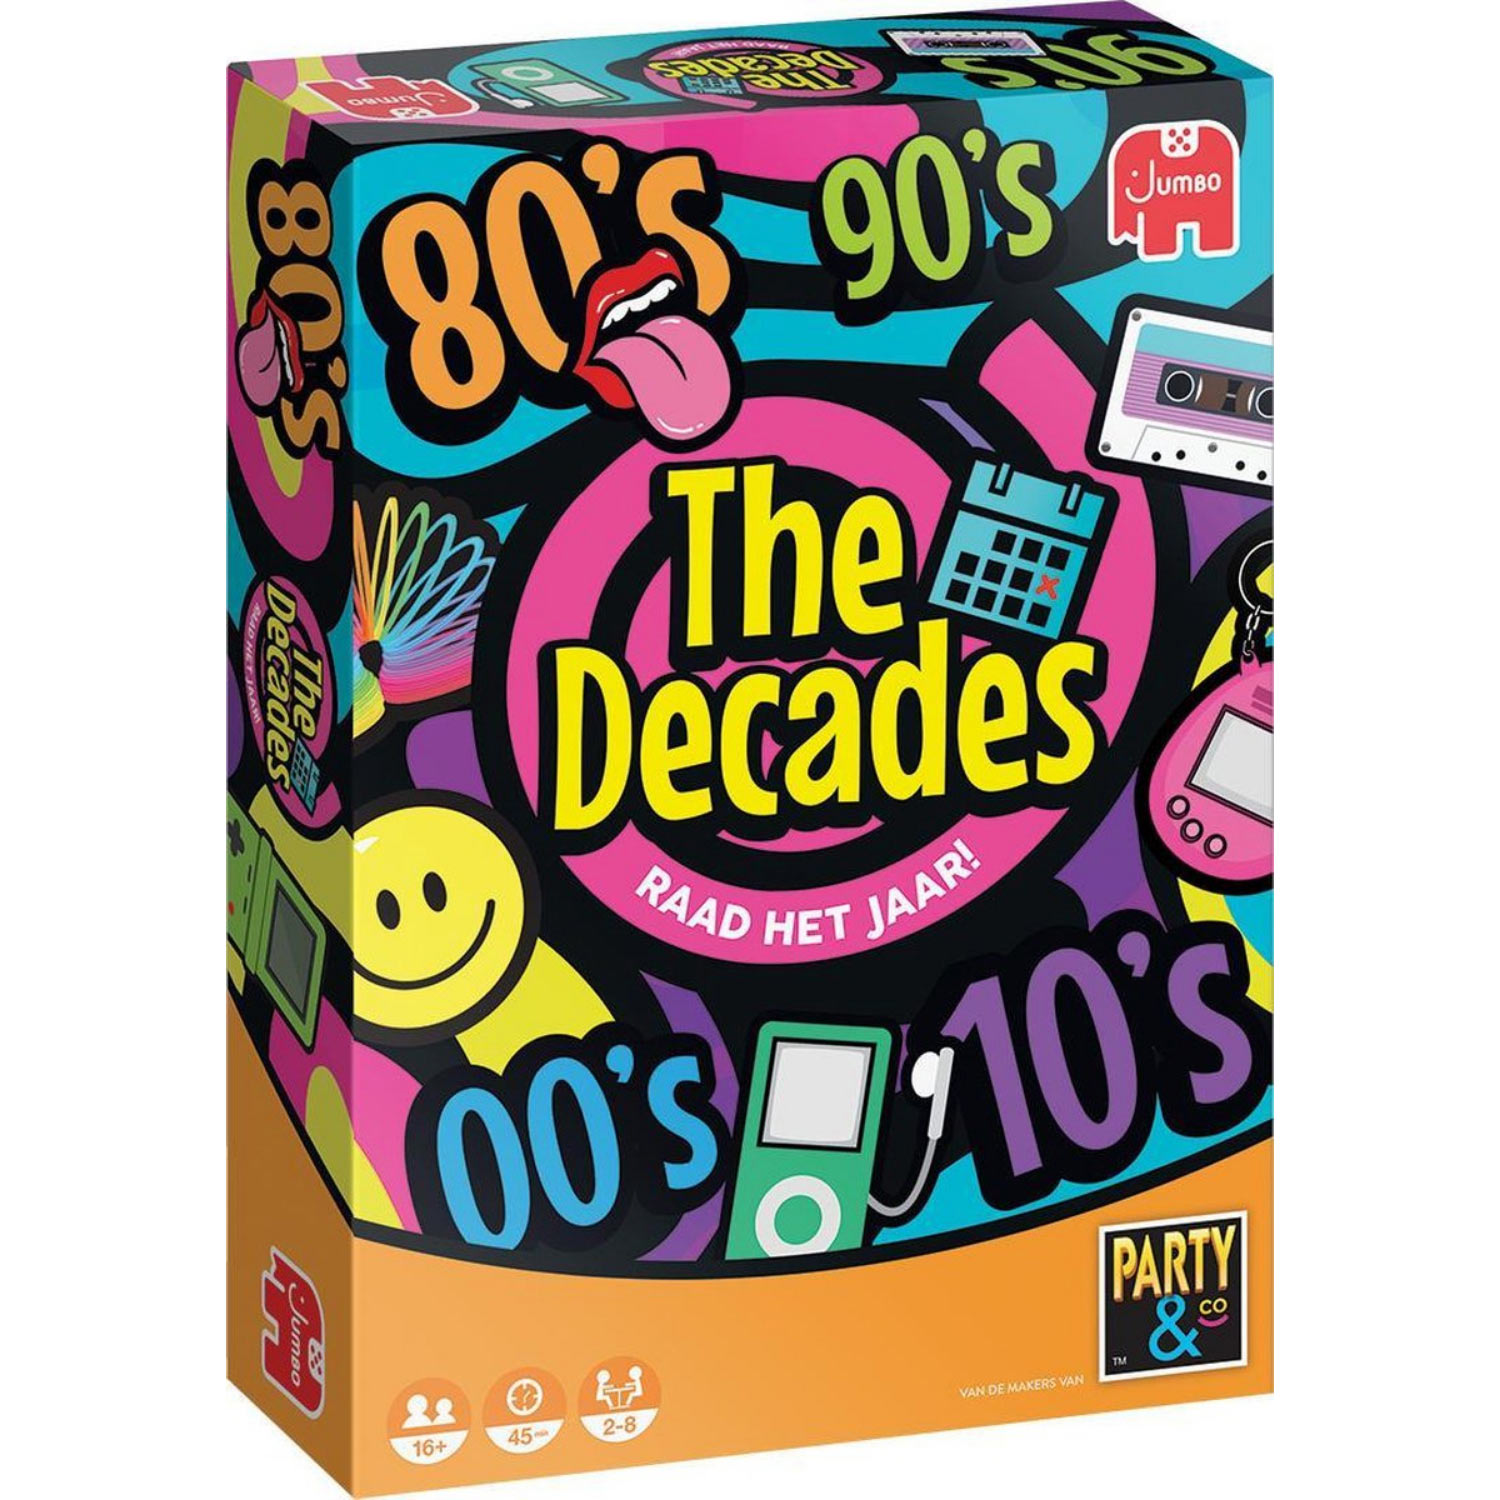 The Decades